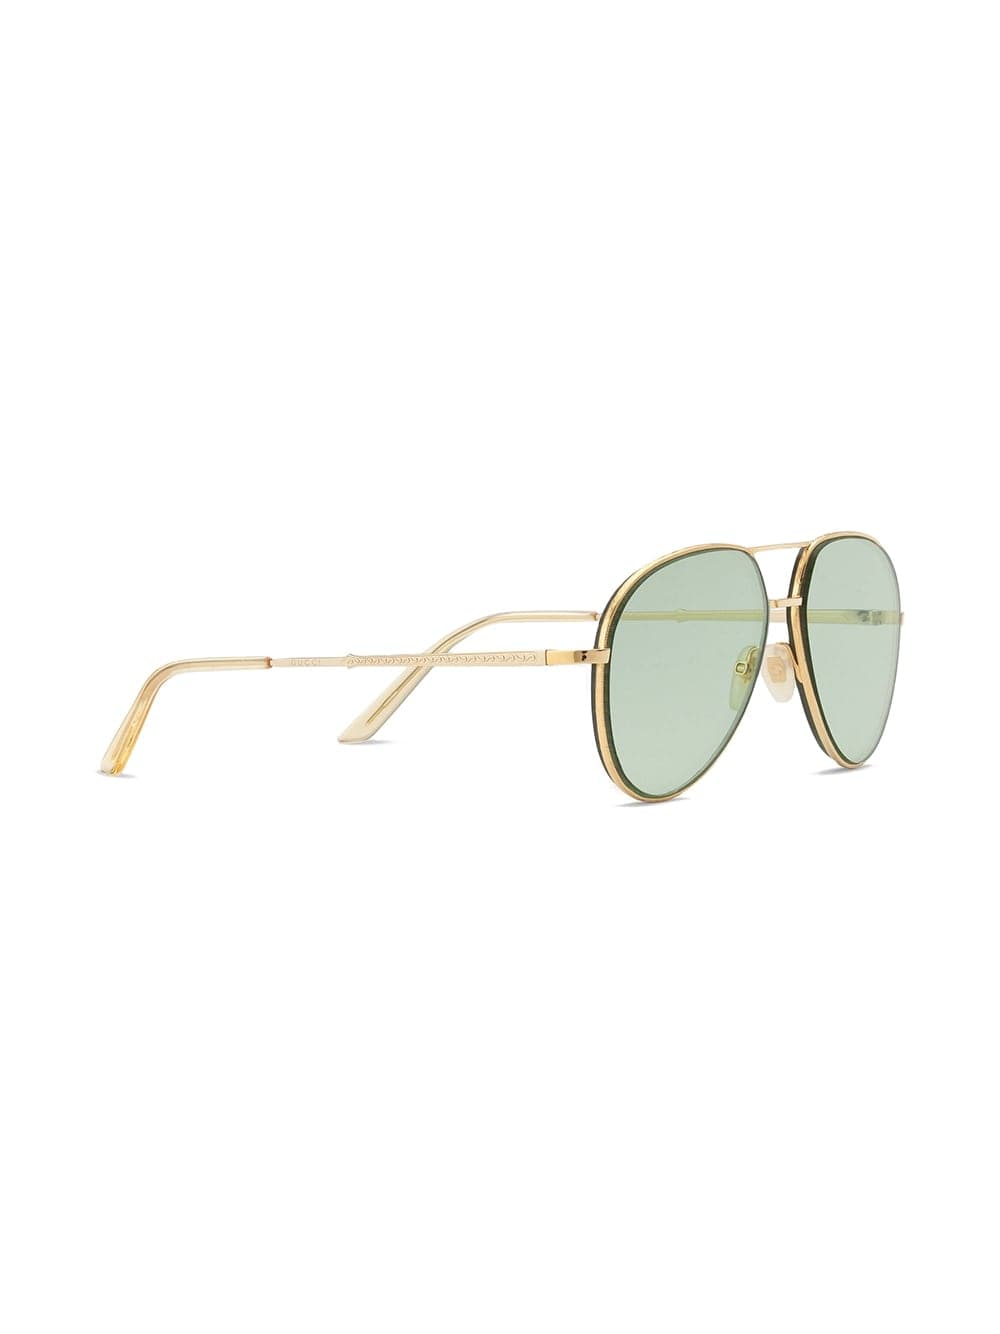 Gucci, Aviator Frame Sunglasses